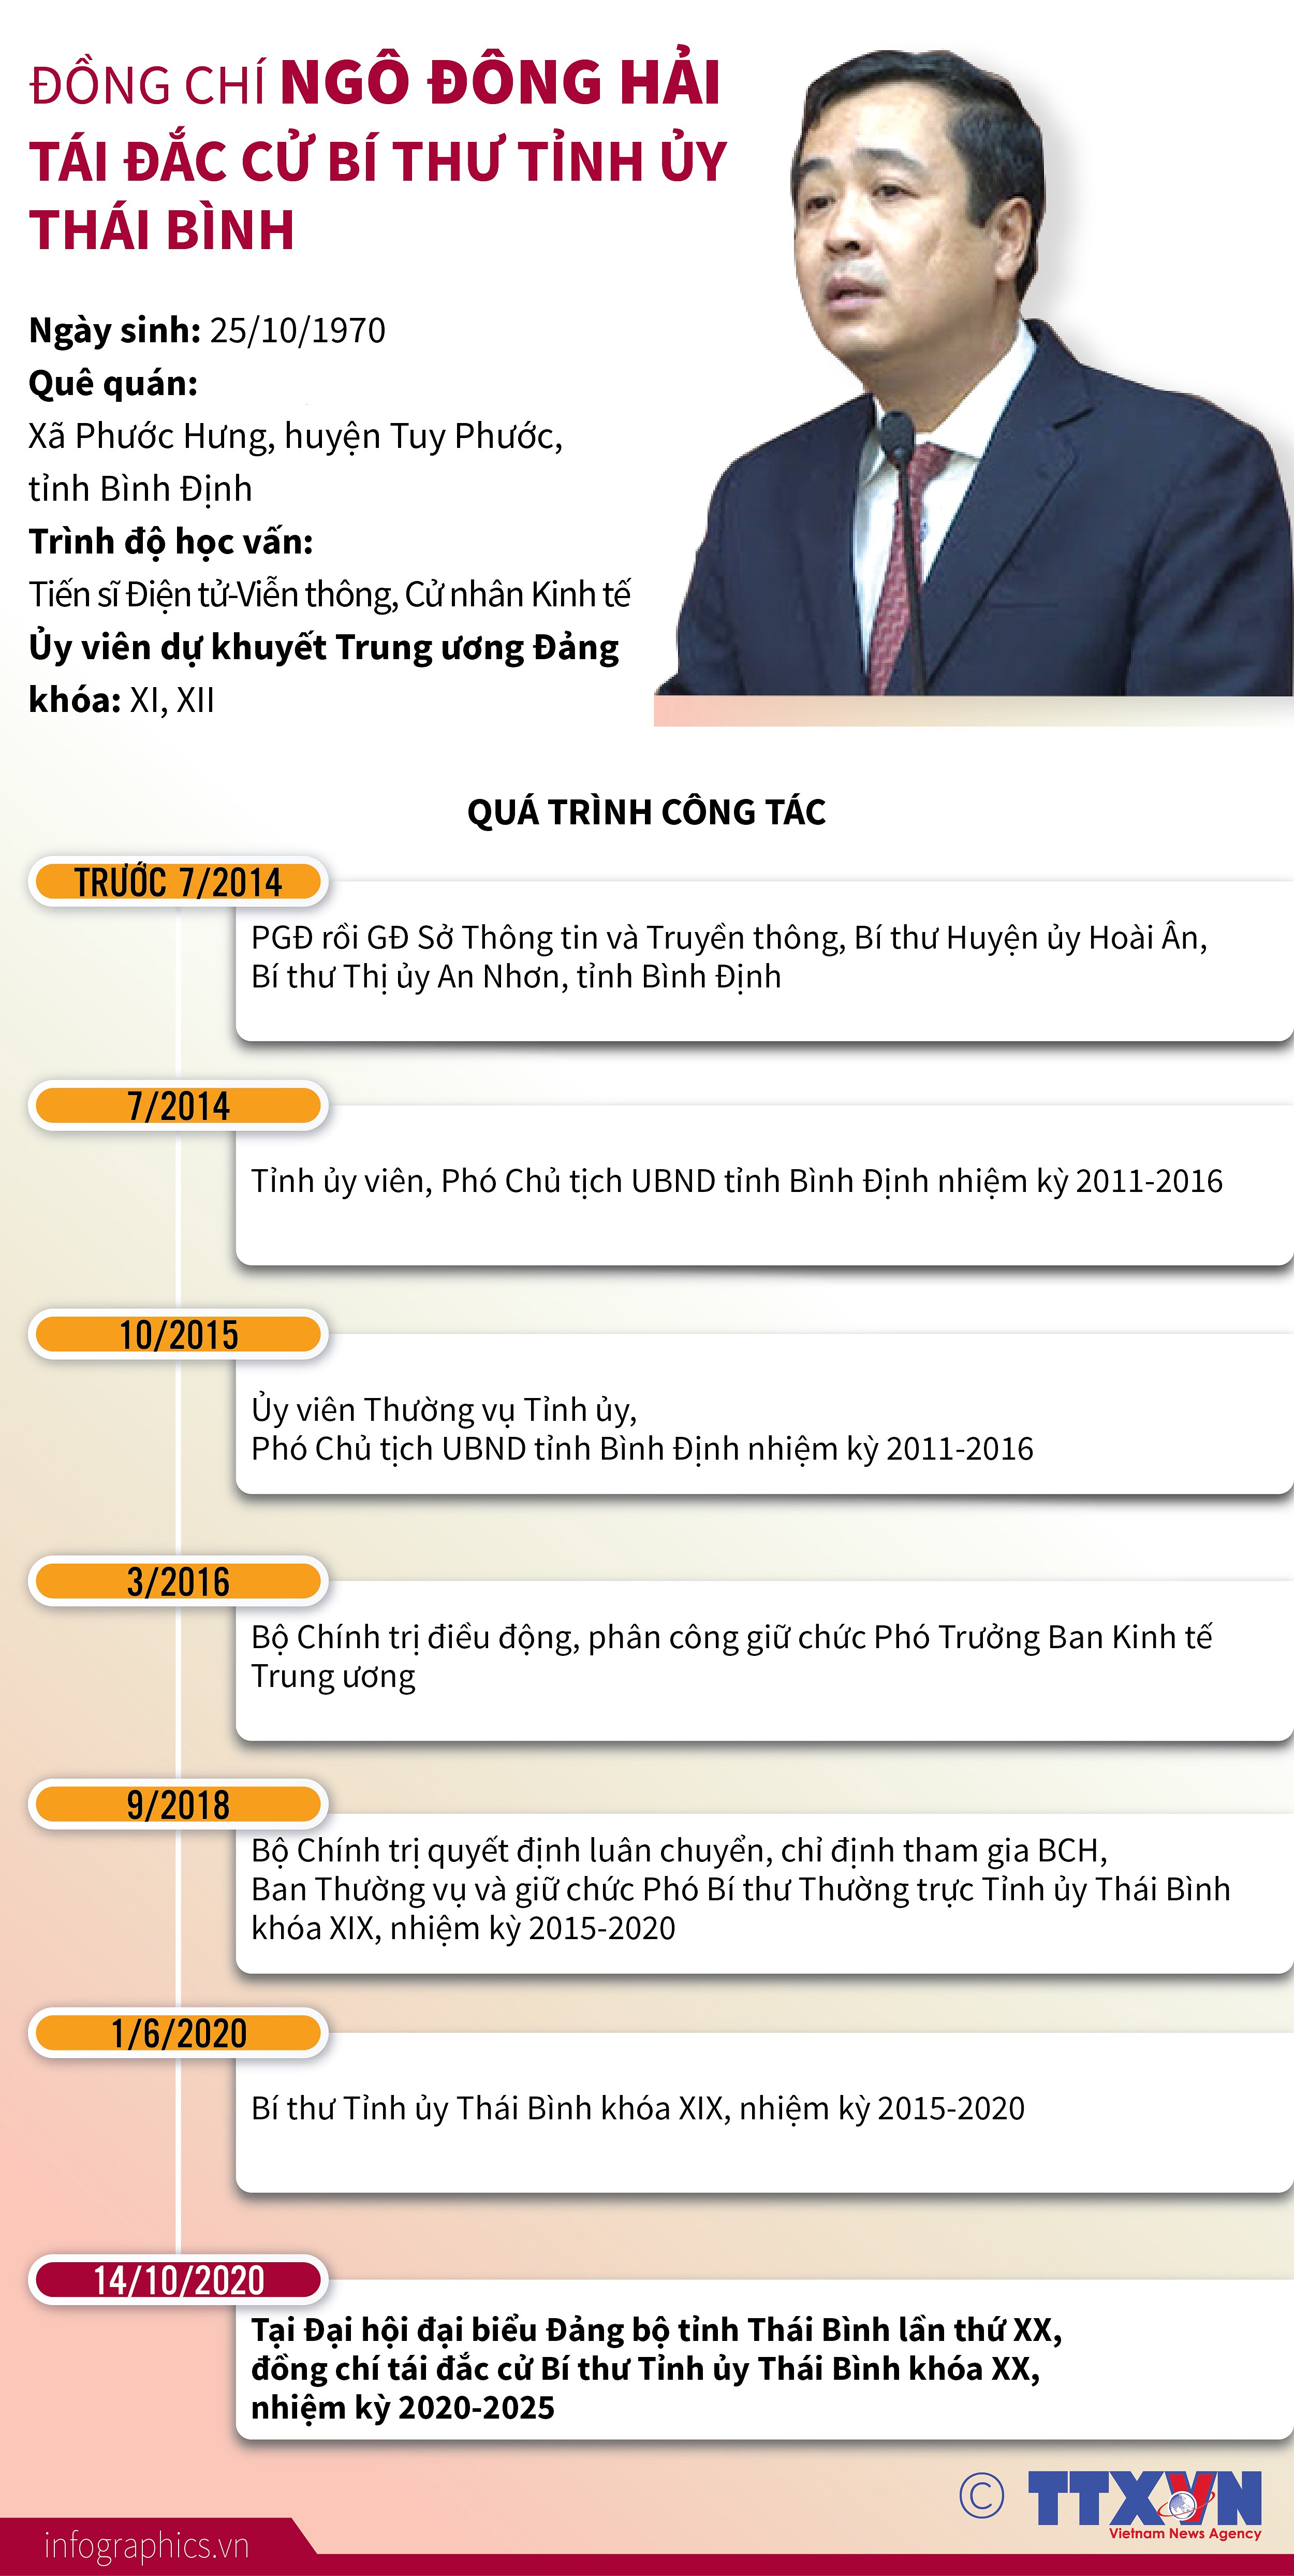 [Infographics] Ong Ngo Dong Hai tai dac cu Bi thu Tinh uy Thai Binh hinh anh 1